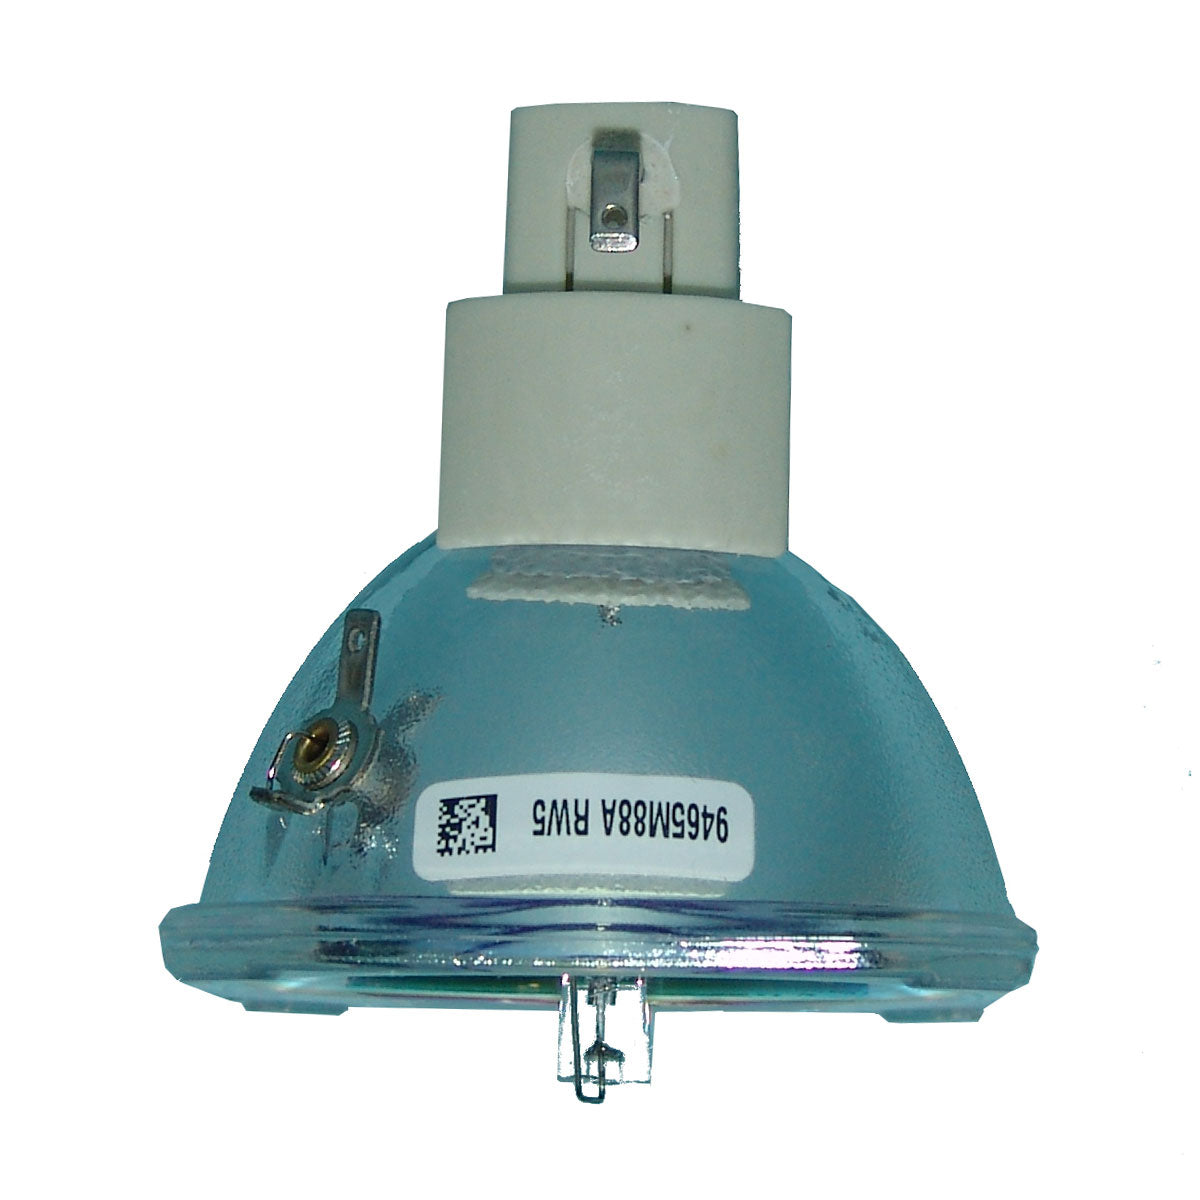 Osram 69851-1 Osram Projector Bare Lamp